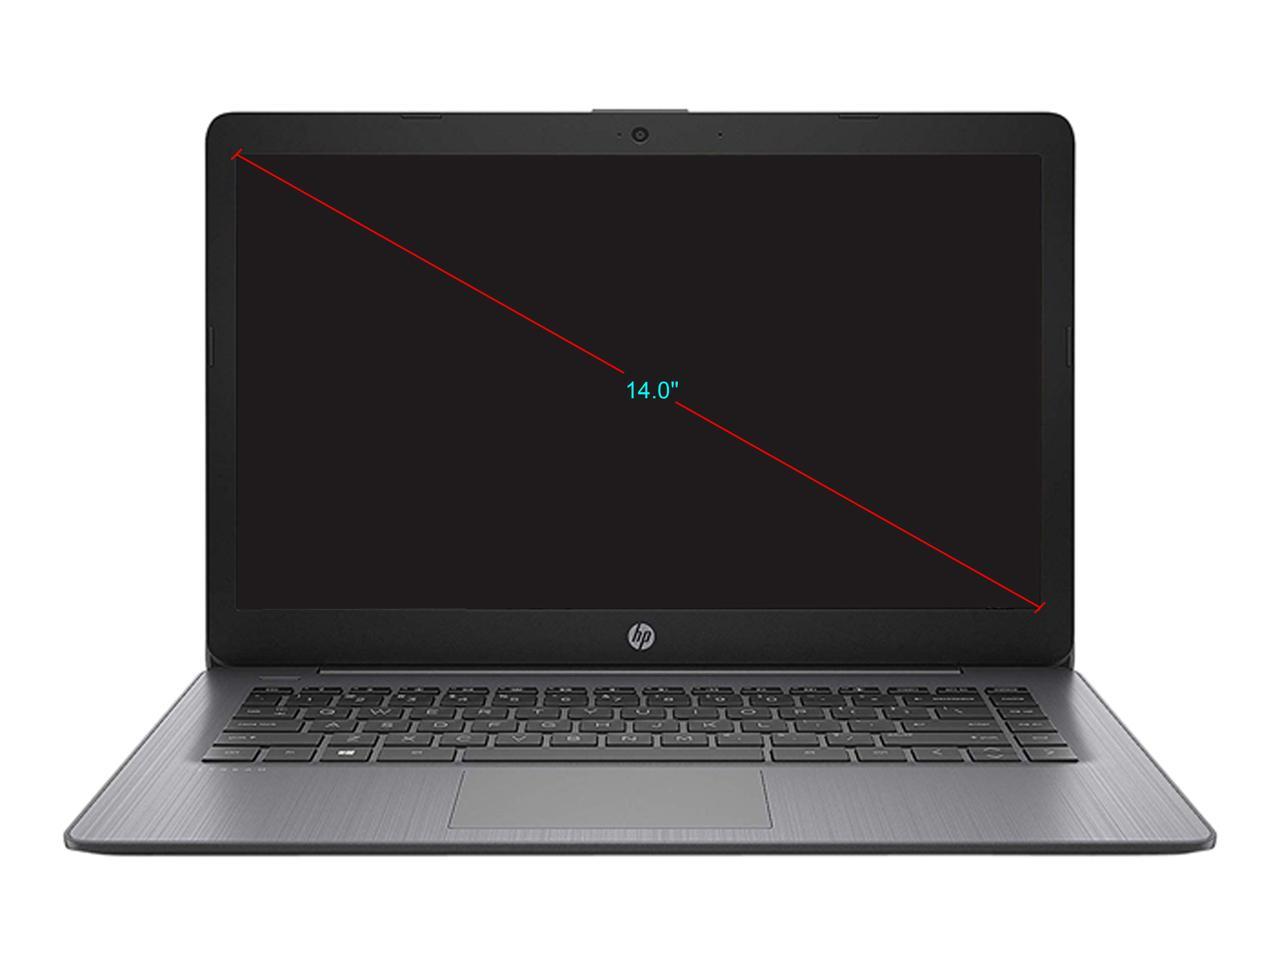 HP Laptop Stream 14-ds0050nr AMD A4-Series A4-9120e (1.50 GHz) 4 GB Memory 64 GB eMMC SSD AMD Radeon R3 Series 14.0" Windows 10 S